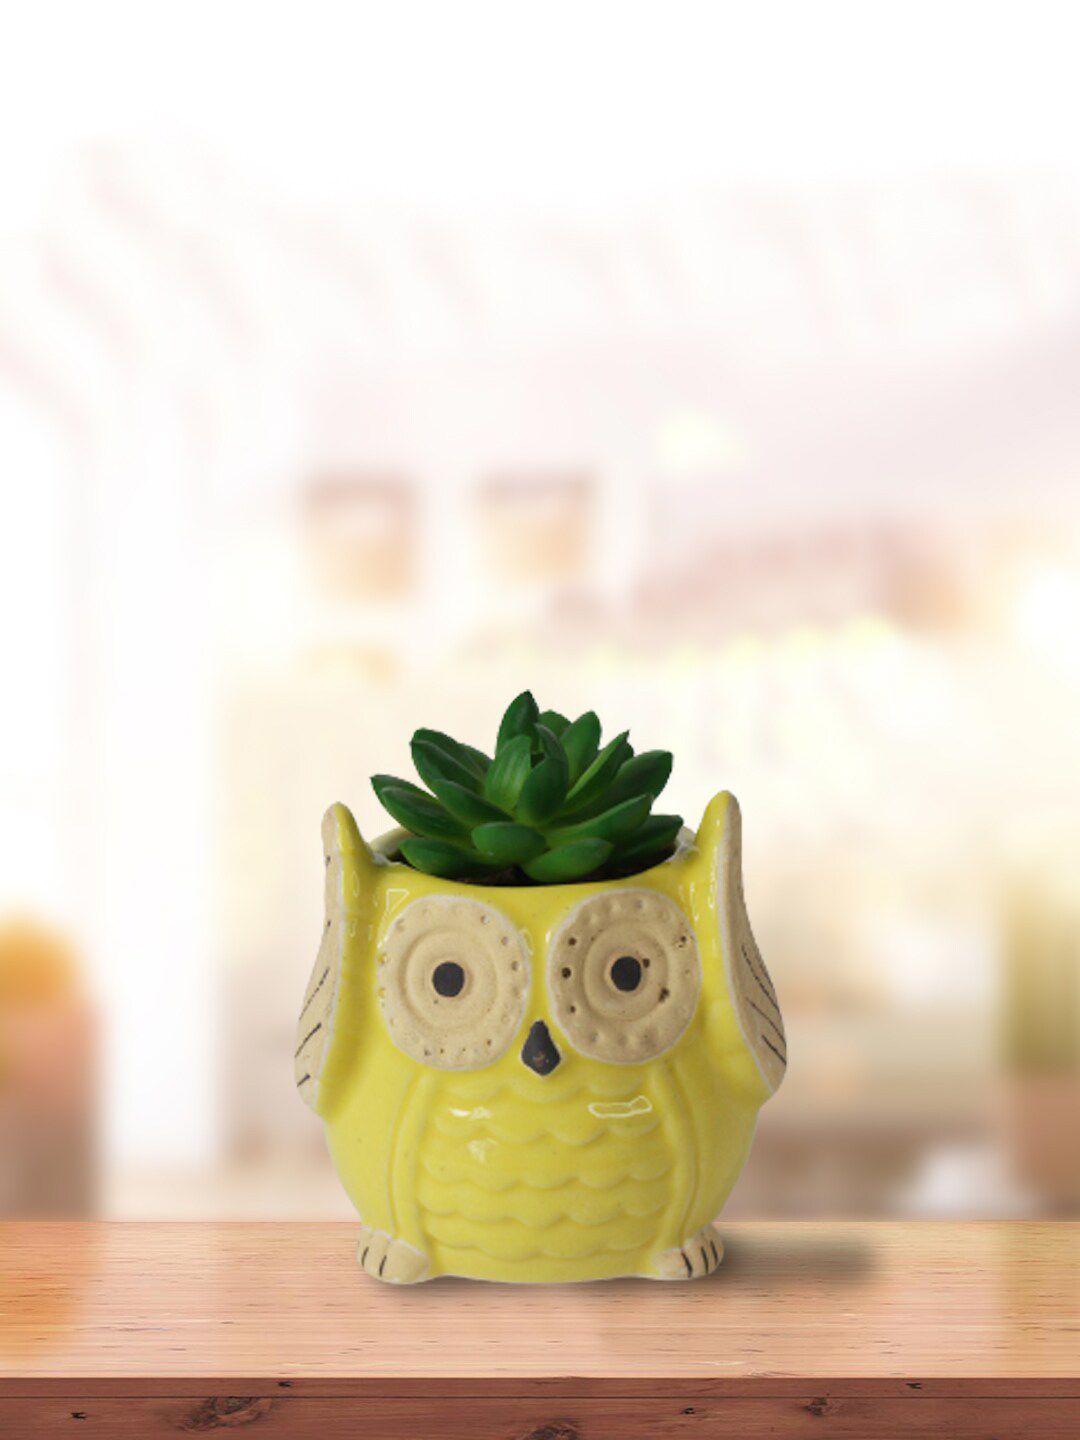 Wonderland Yellow Ceramic Owl-Shaped Planter Price in India